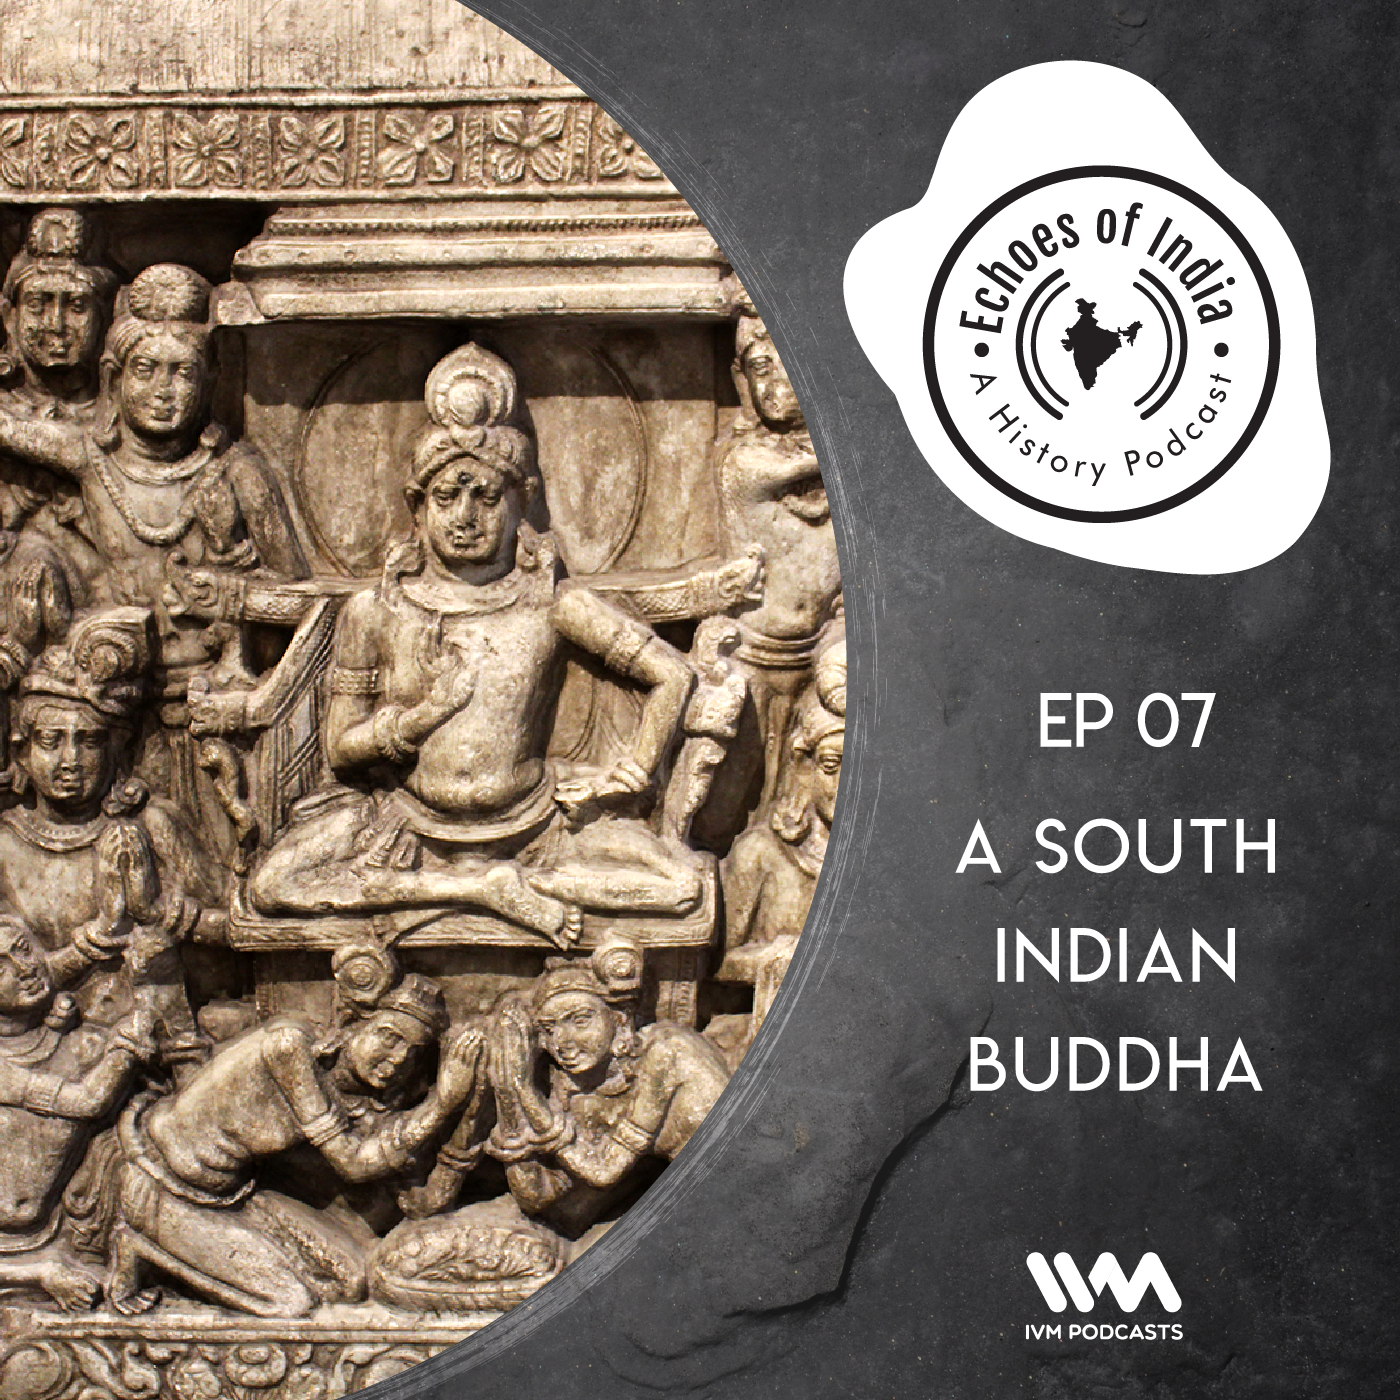 A South Indian Buddha